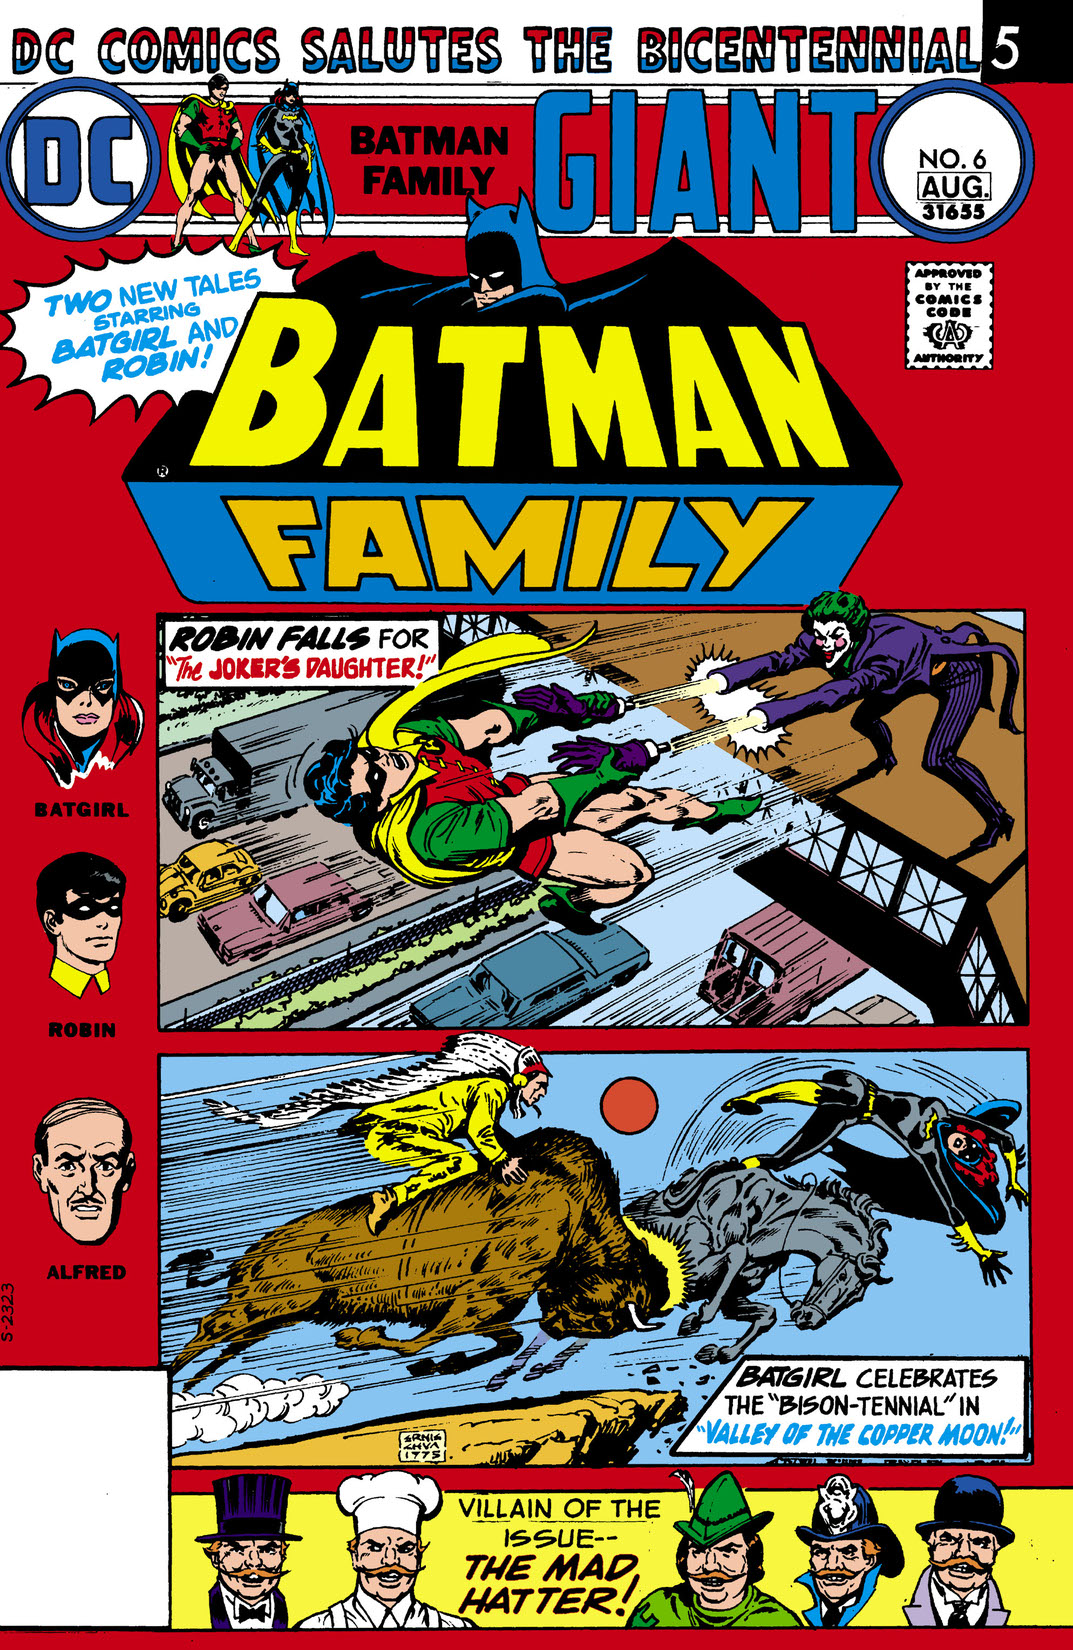 Batman Family #6 preview images